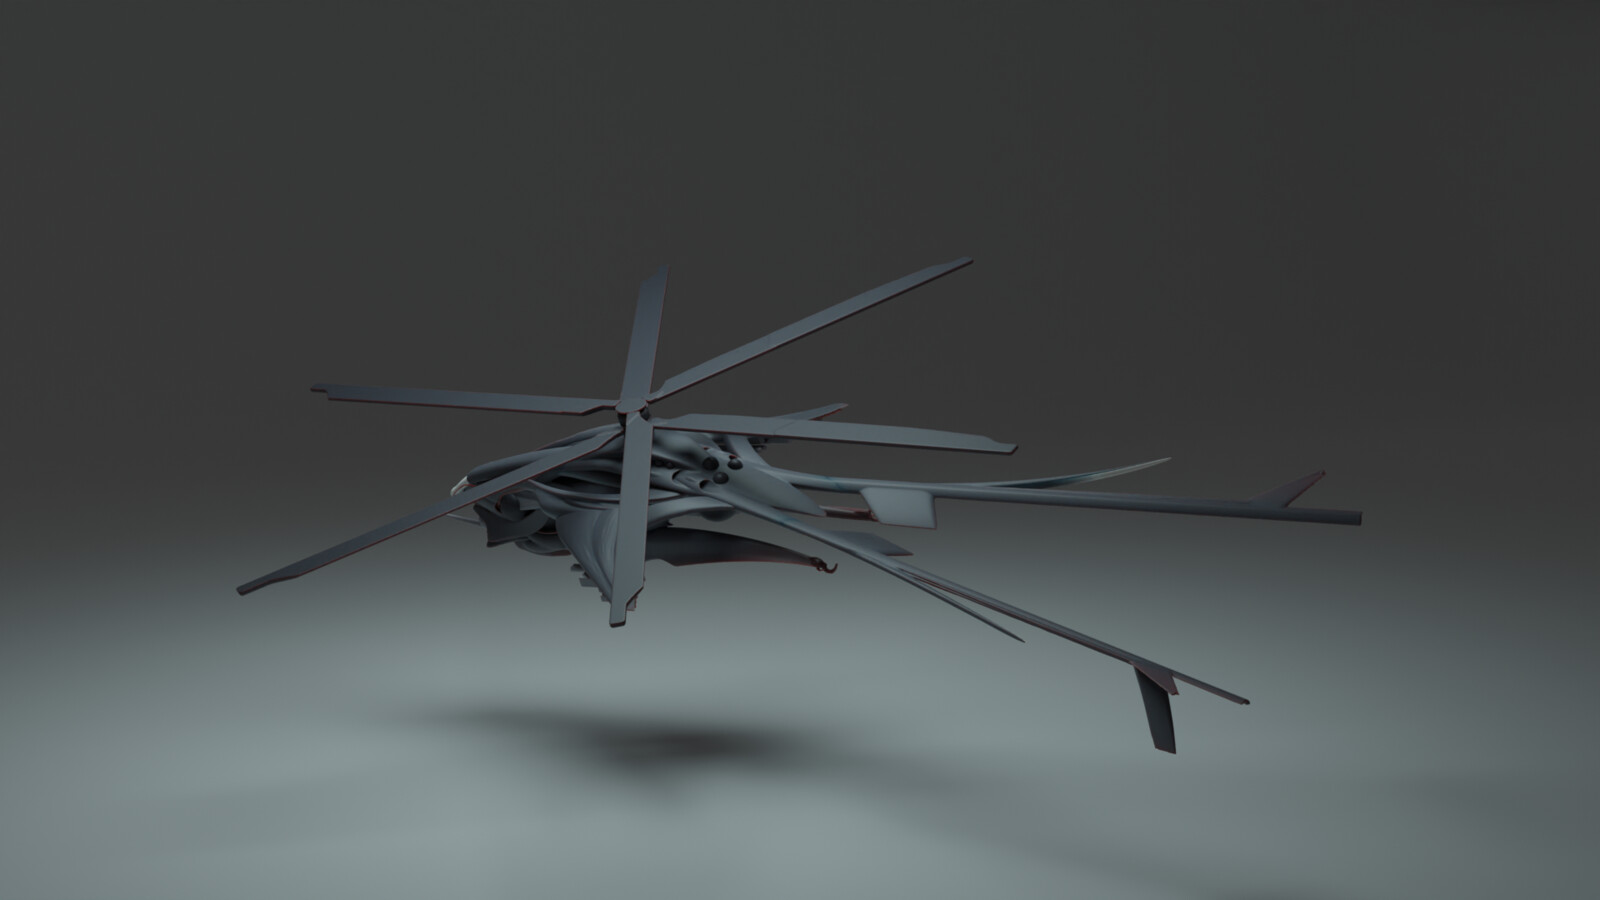 Vespa'Nora Concept Sculpt 01
Autonomous Heavy Assault Craft